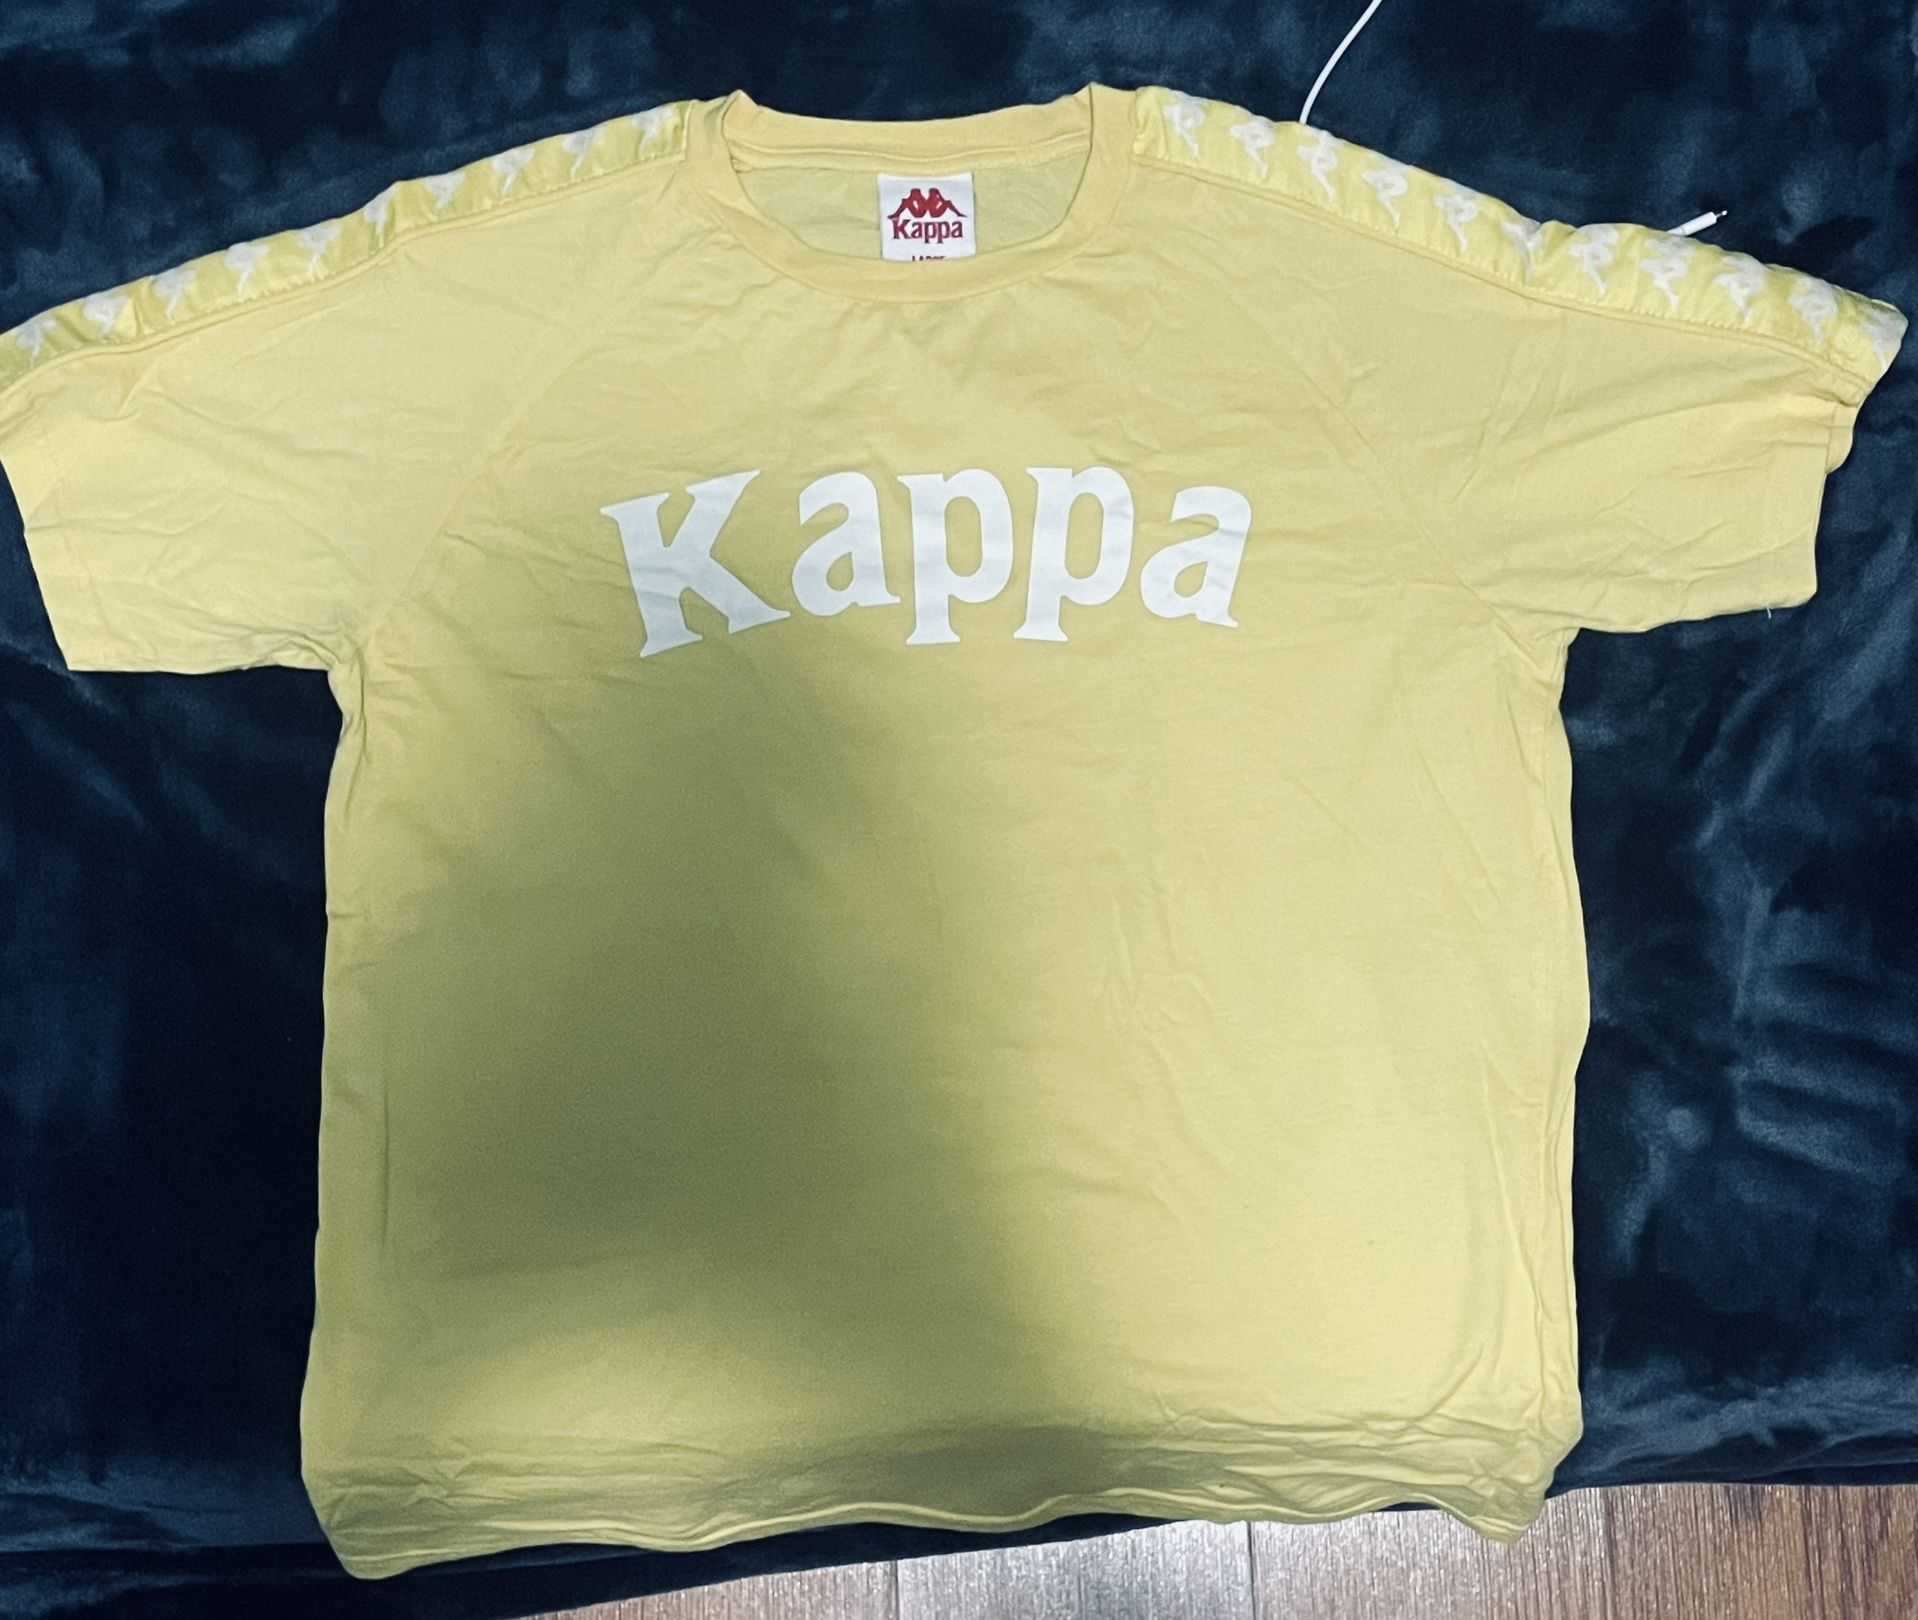 Yellow Kappa Shirt